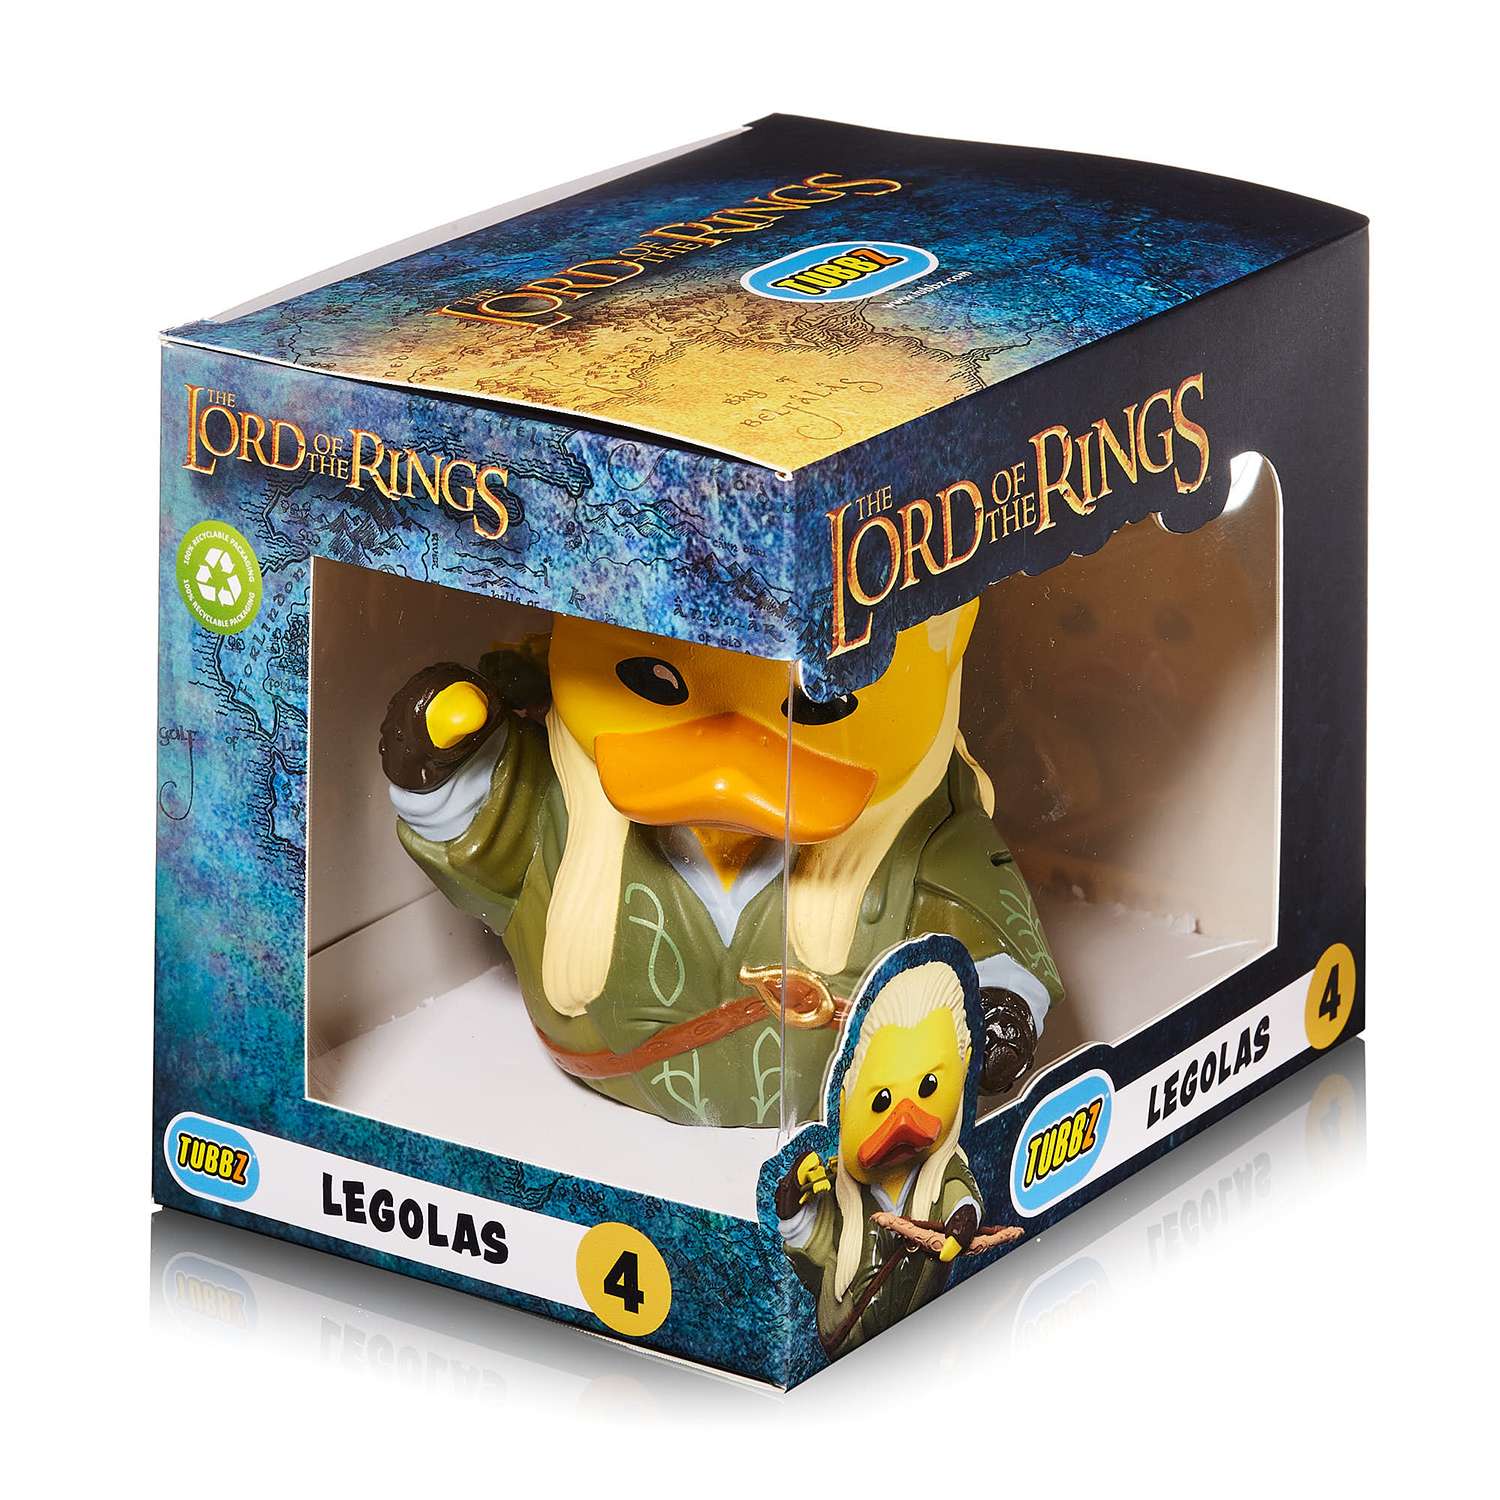 Фигурка The Lord of the Rings Утка Tubbz Леголас из Властелина колец Boxed Edition без ванны - фото 2